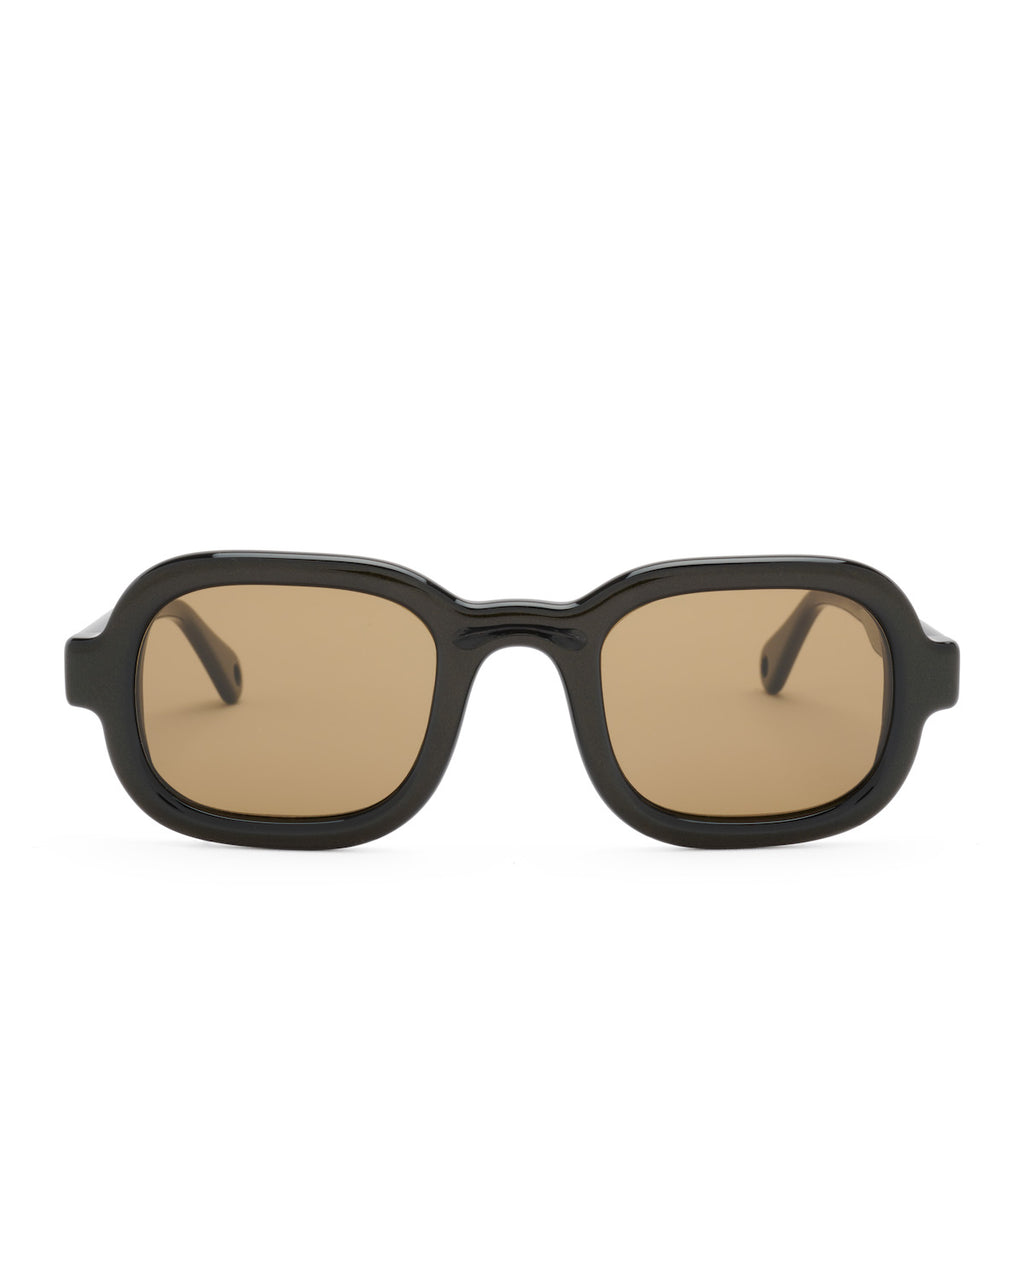 Newman Post Modern Primitive Eye Protection Sunglasses - Black/Brown 1